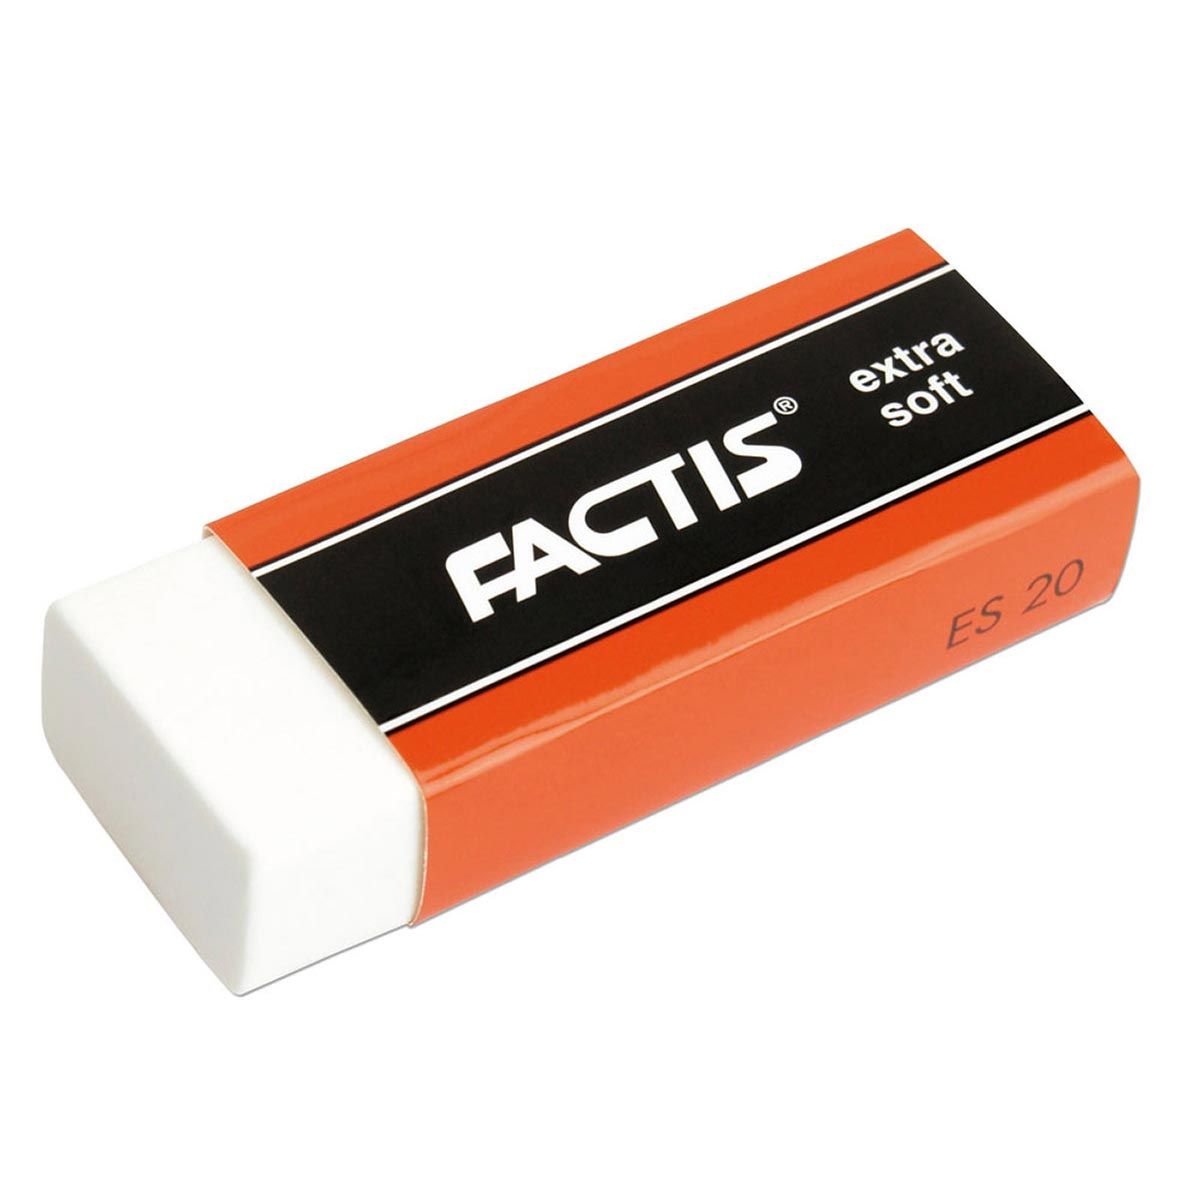 General's Pencil Factis Extra Soft White Vinyl Eraser